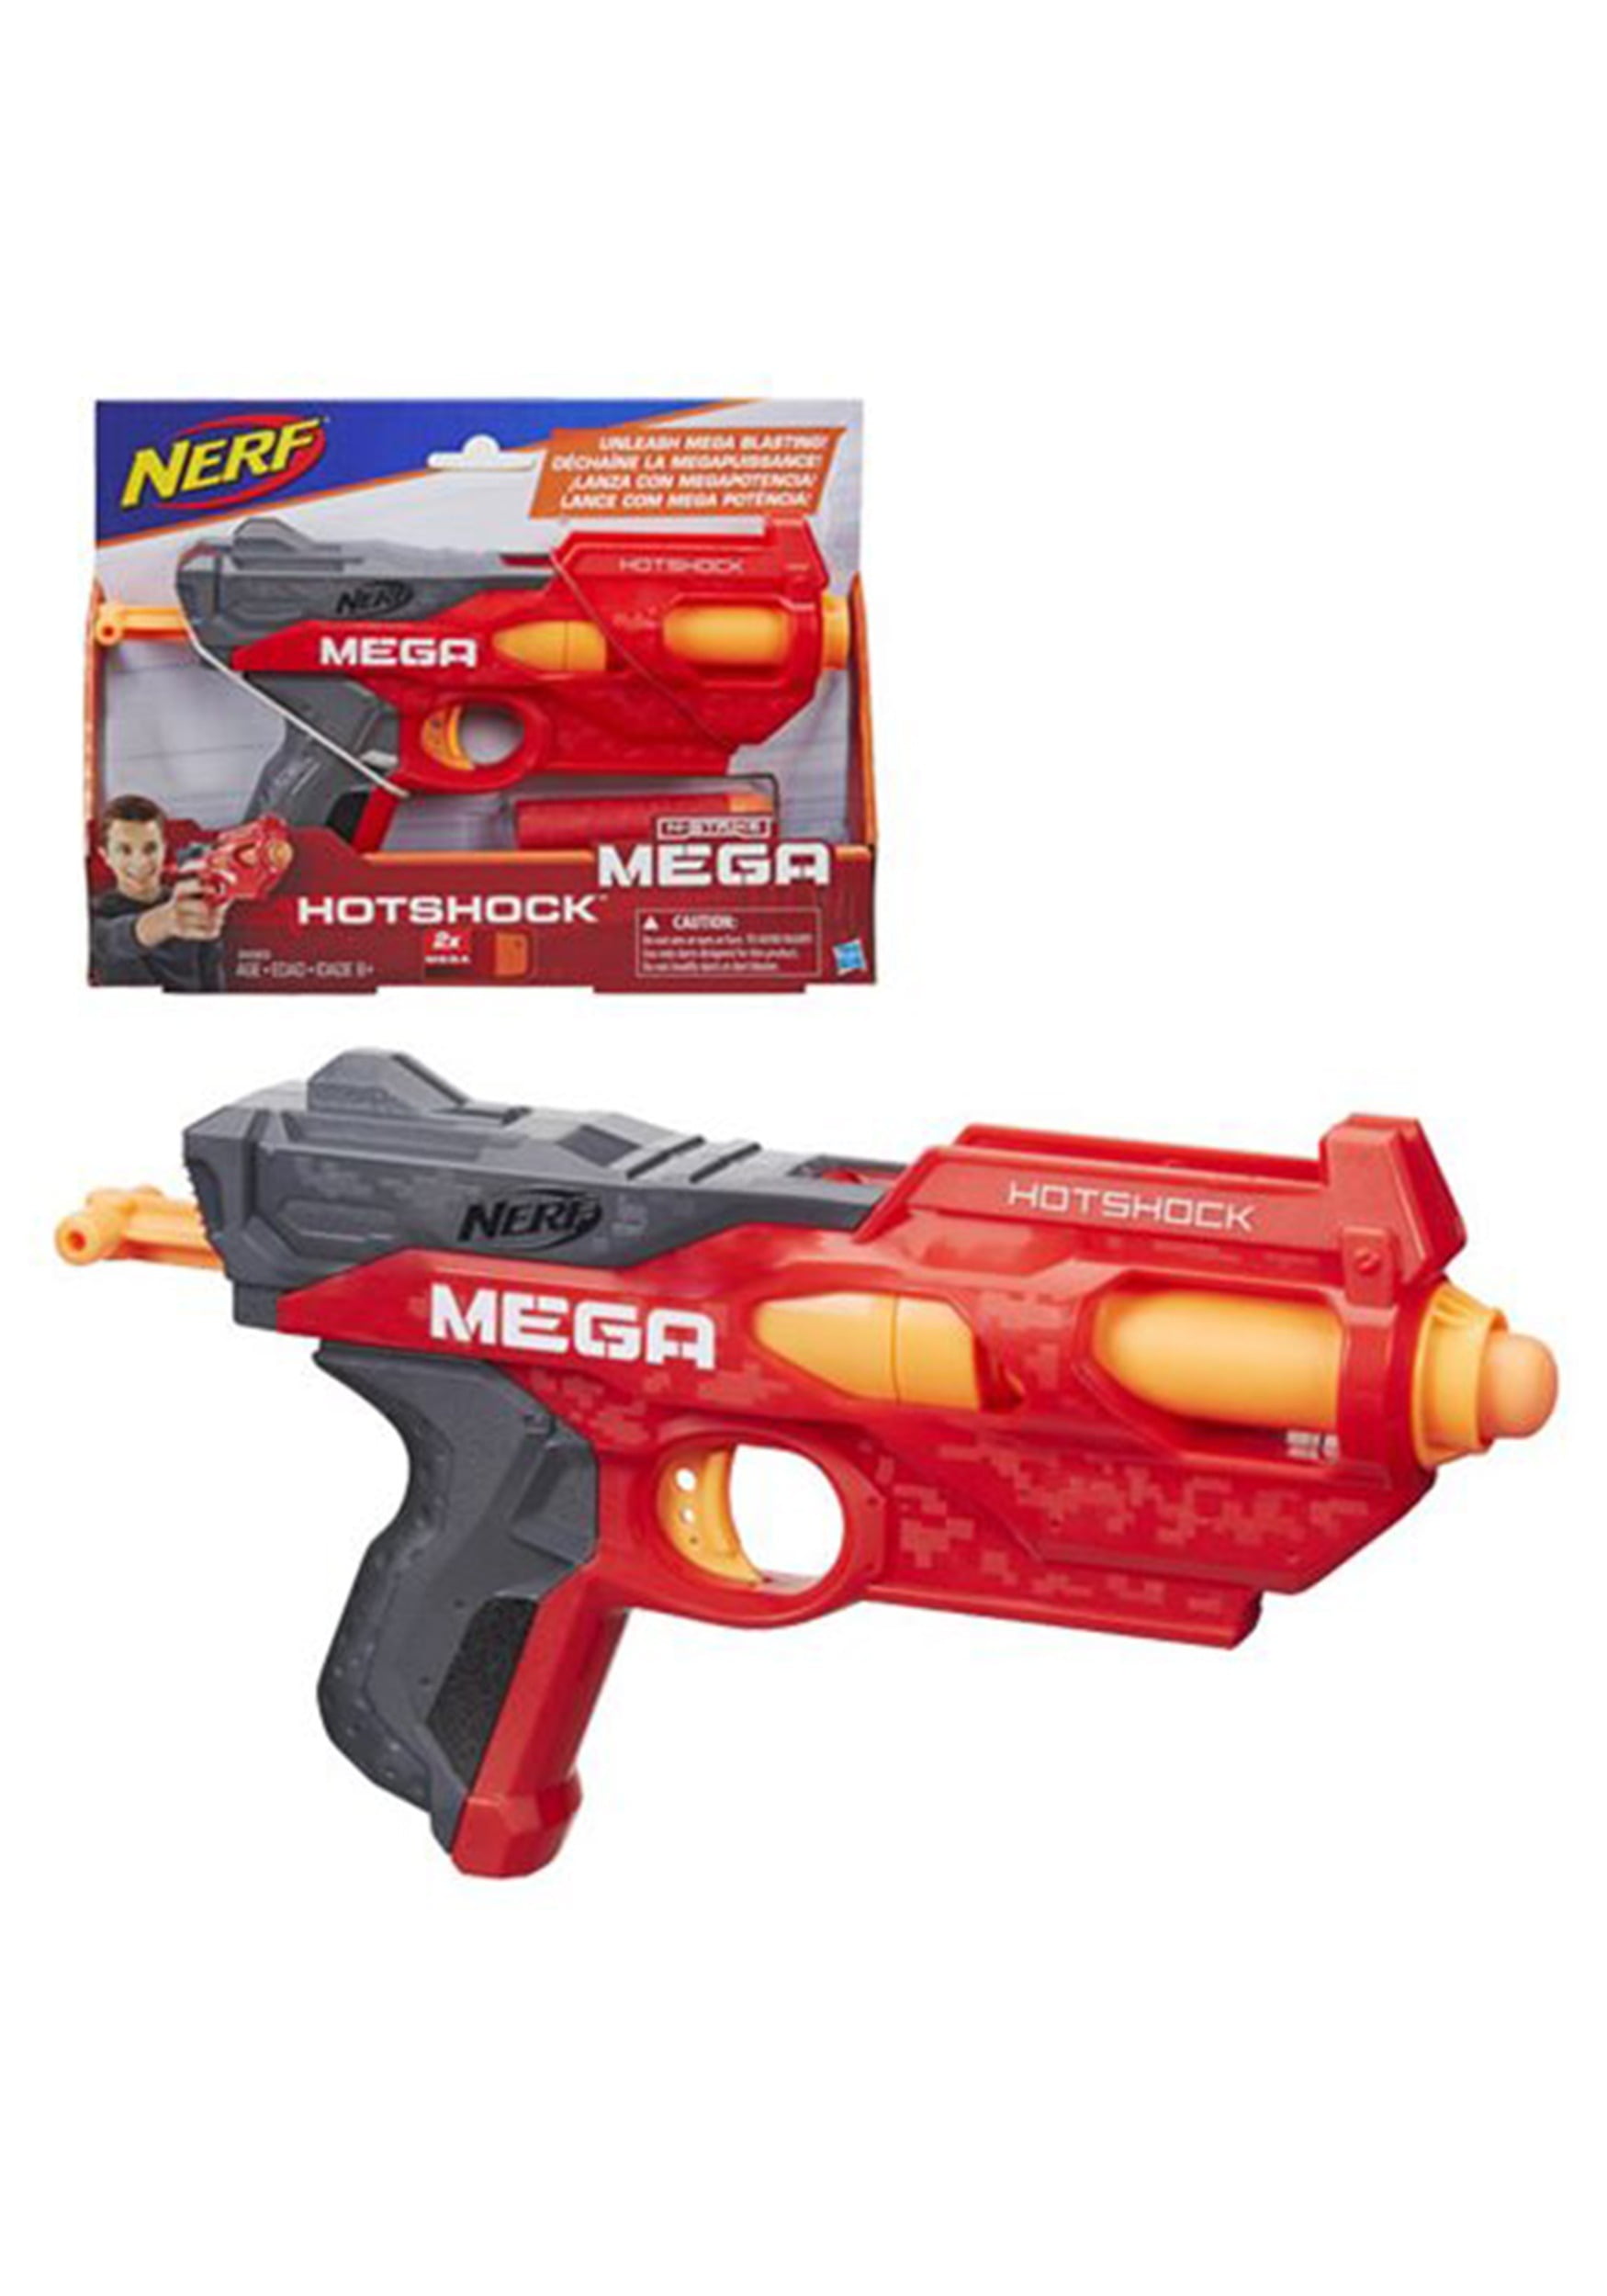 Details about   NERF N-strike Elite Mega Magnus Blaster Red White Orange Tested 3 Foam Darts 